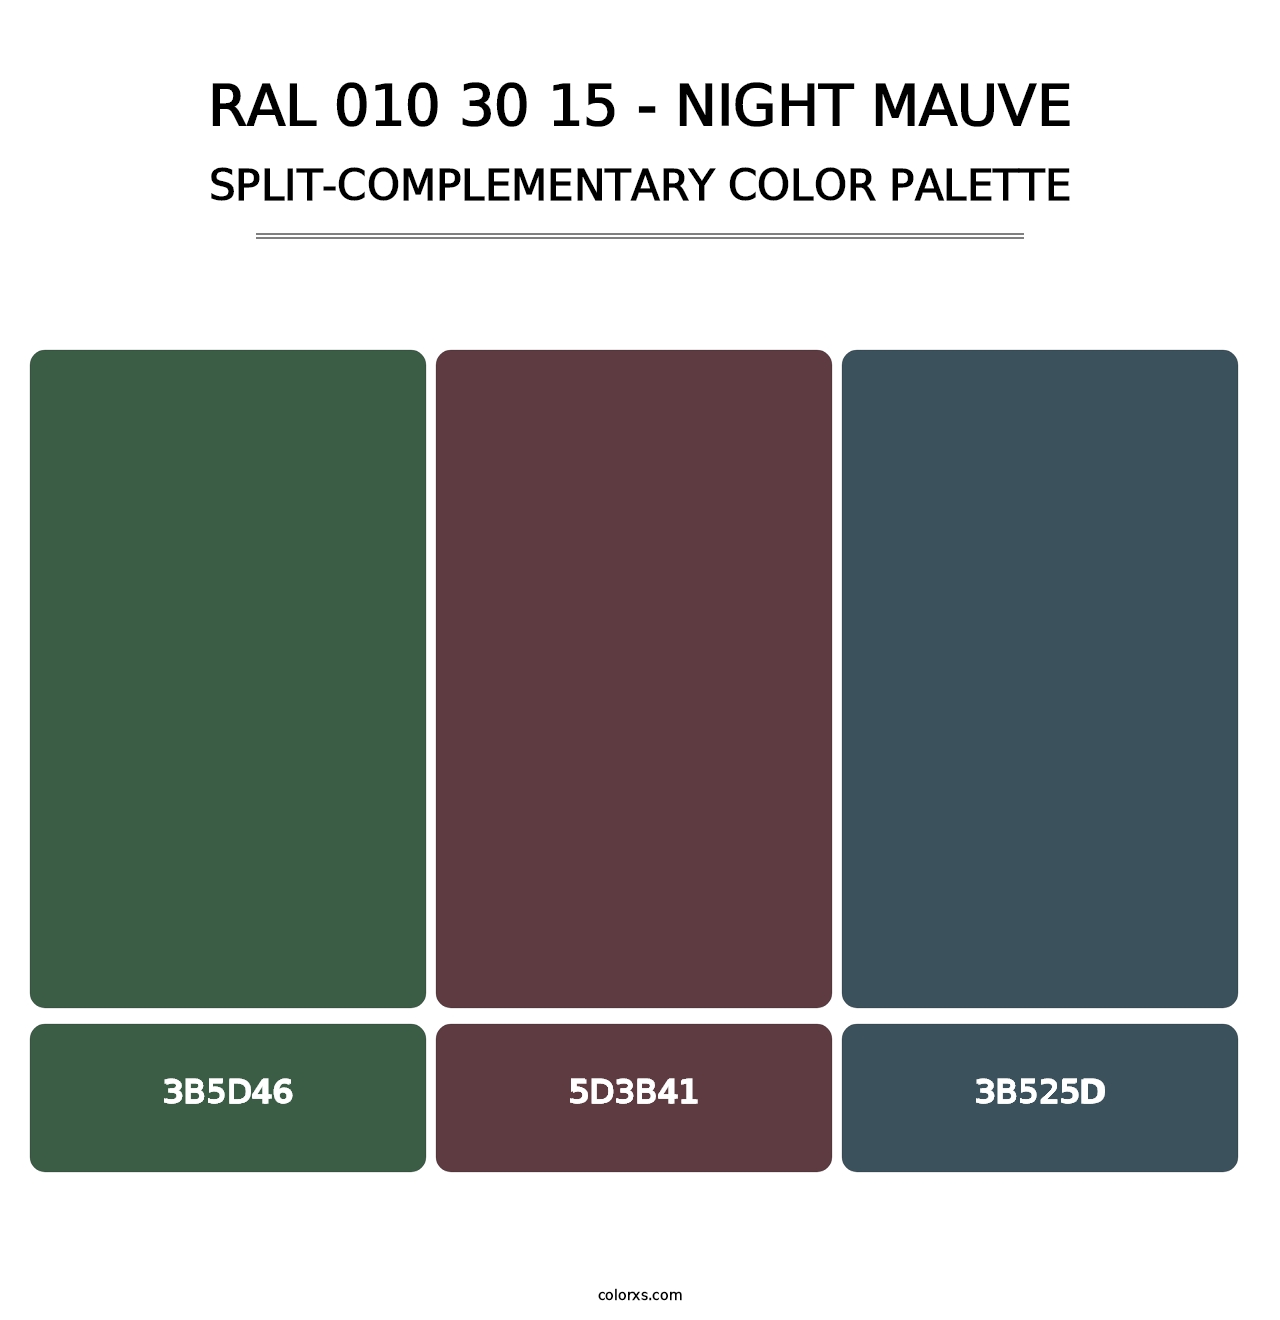 RAL 010 30 15 - Night Mauve - Split-Complementary Color Palette